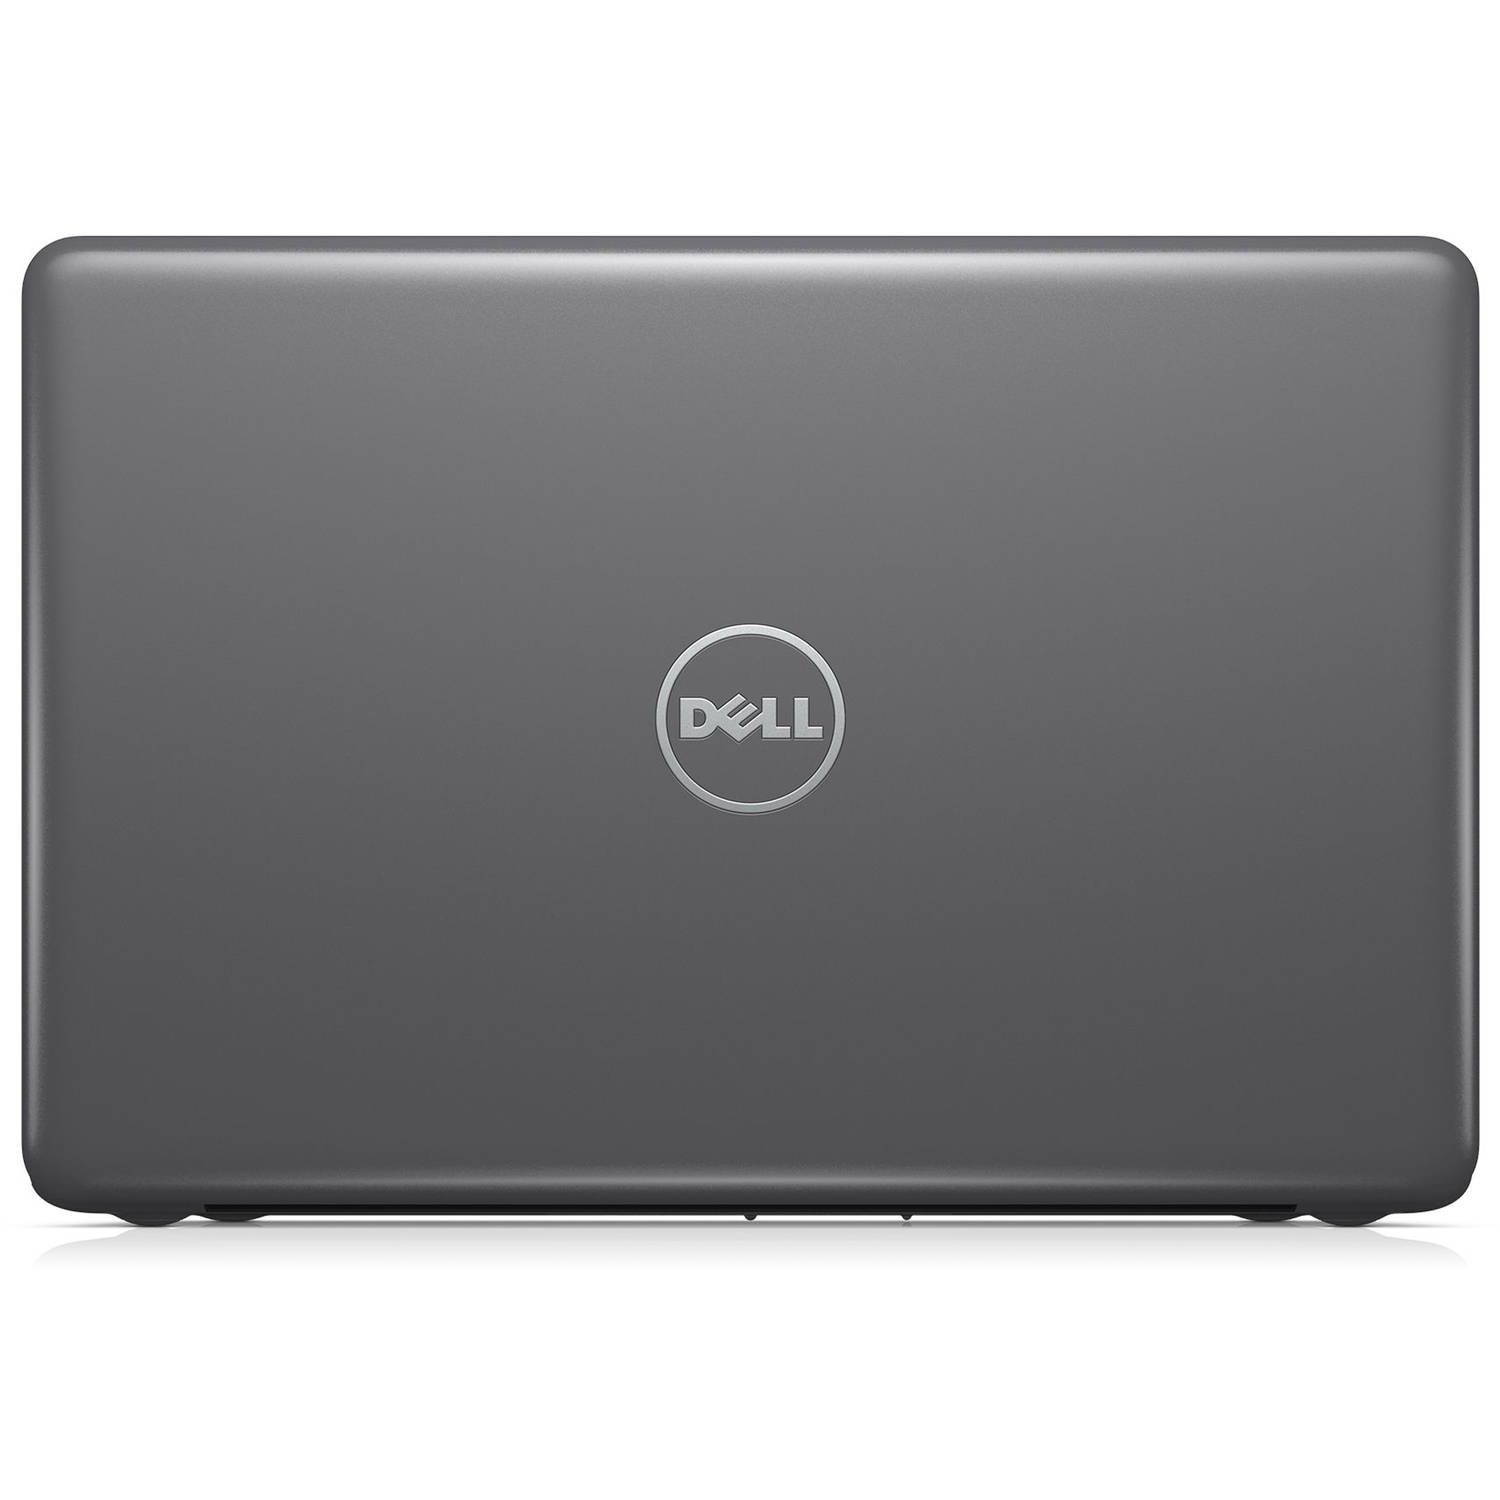 Dell - Inspiron 15.6" Touch-Screen Laptop - AMD FX - 16GB Memory - AMD Radeon R7 M445 - 1TB HD - Matte gray - image 3 of 8